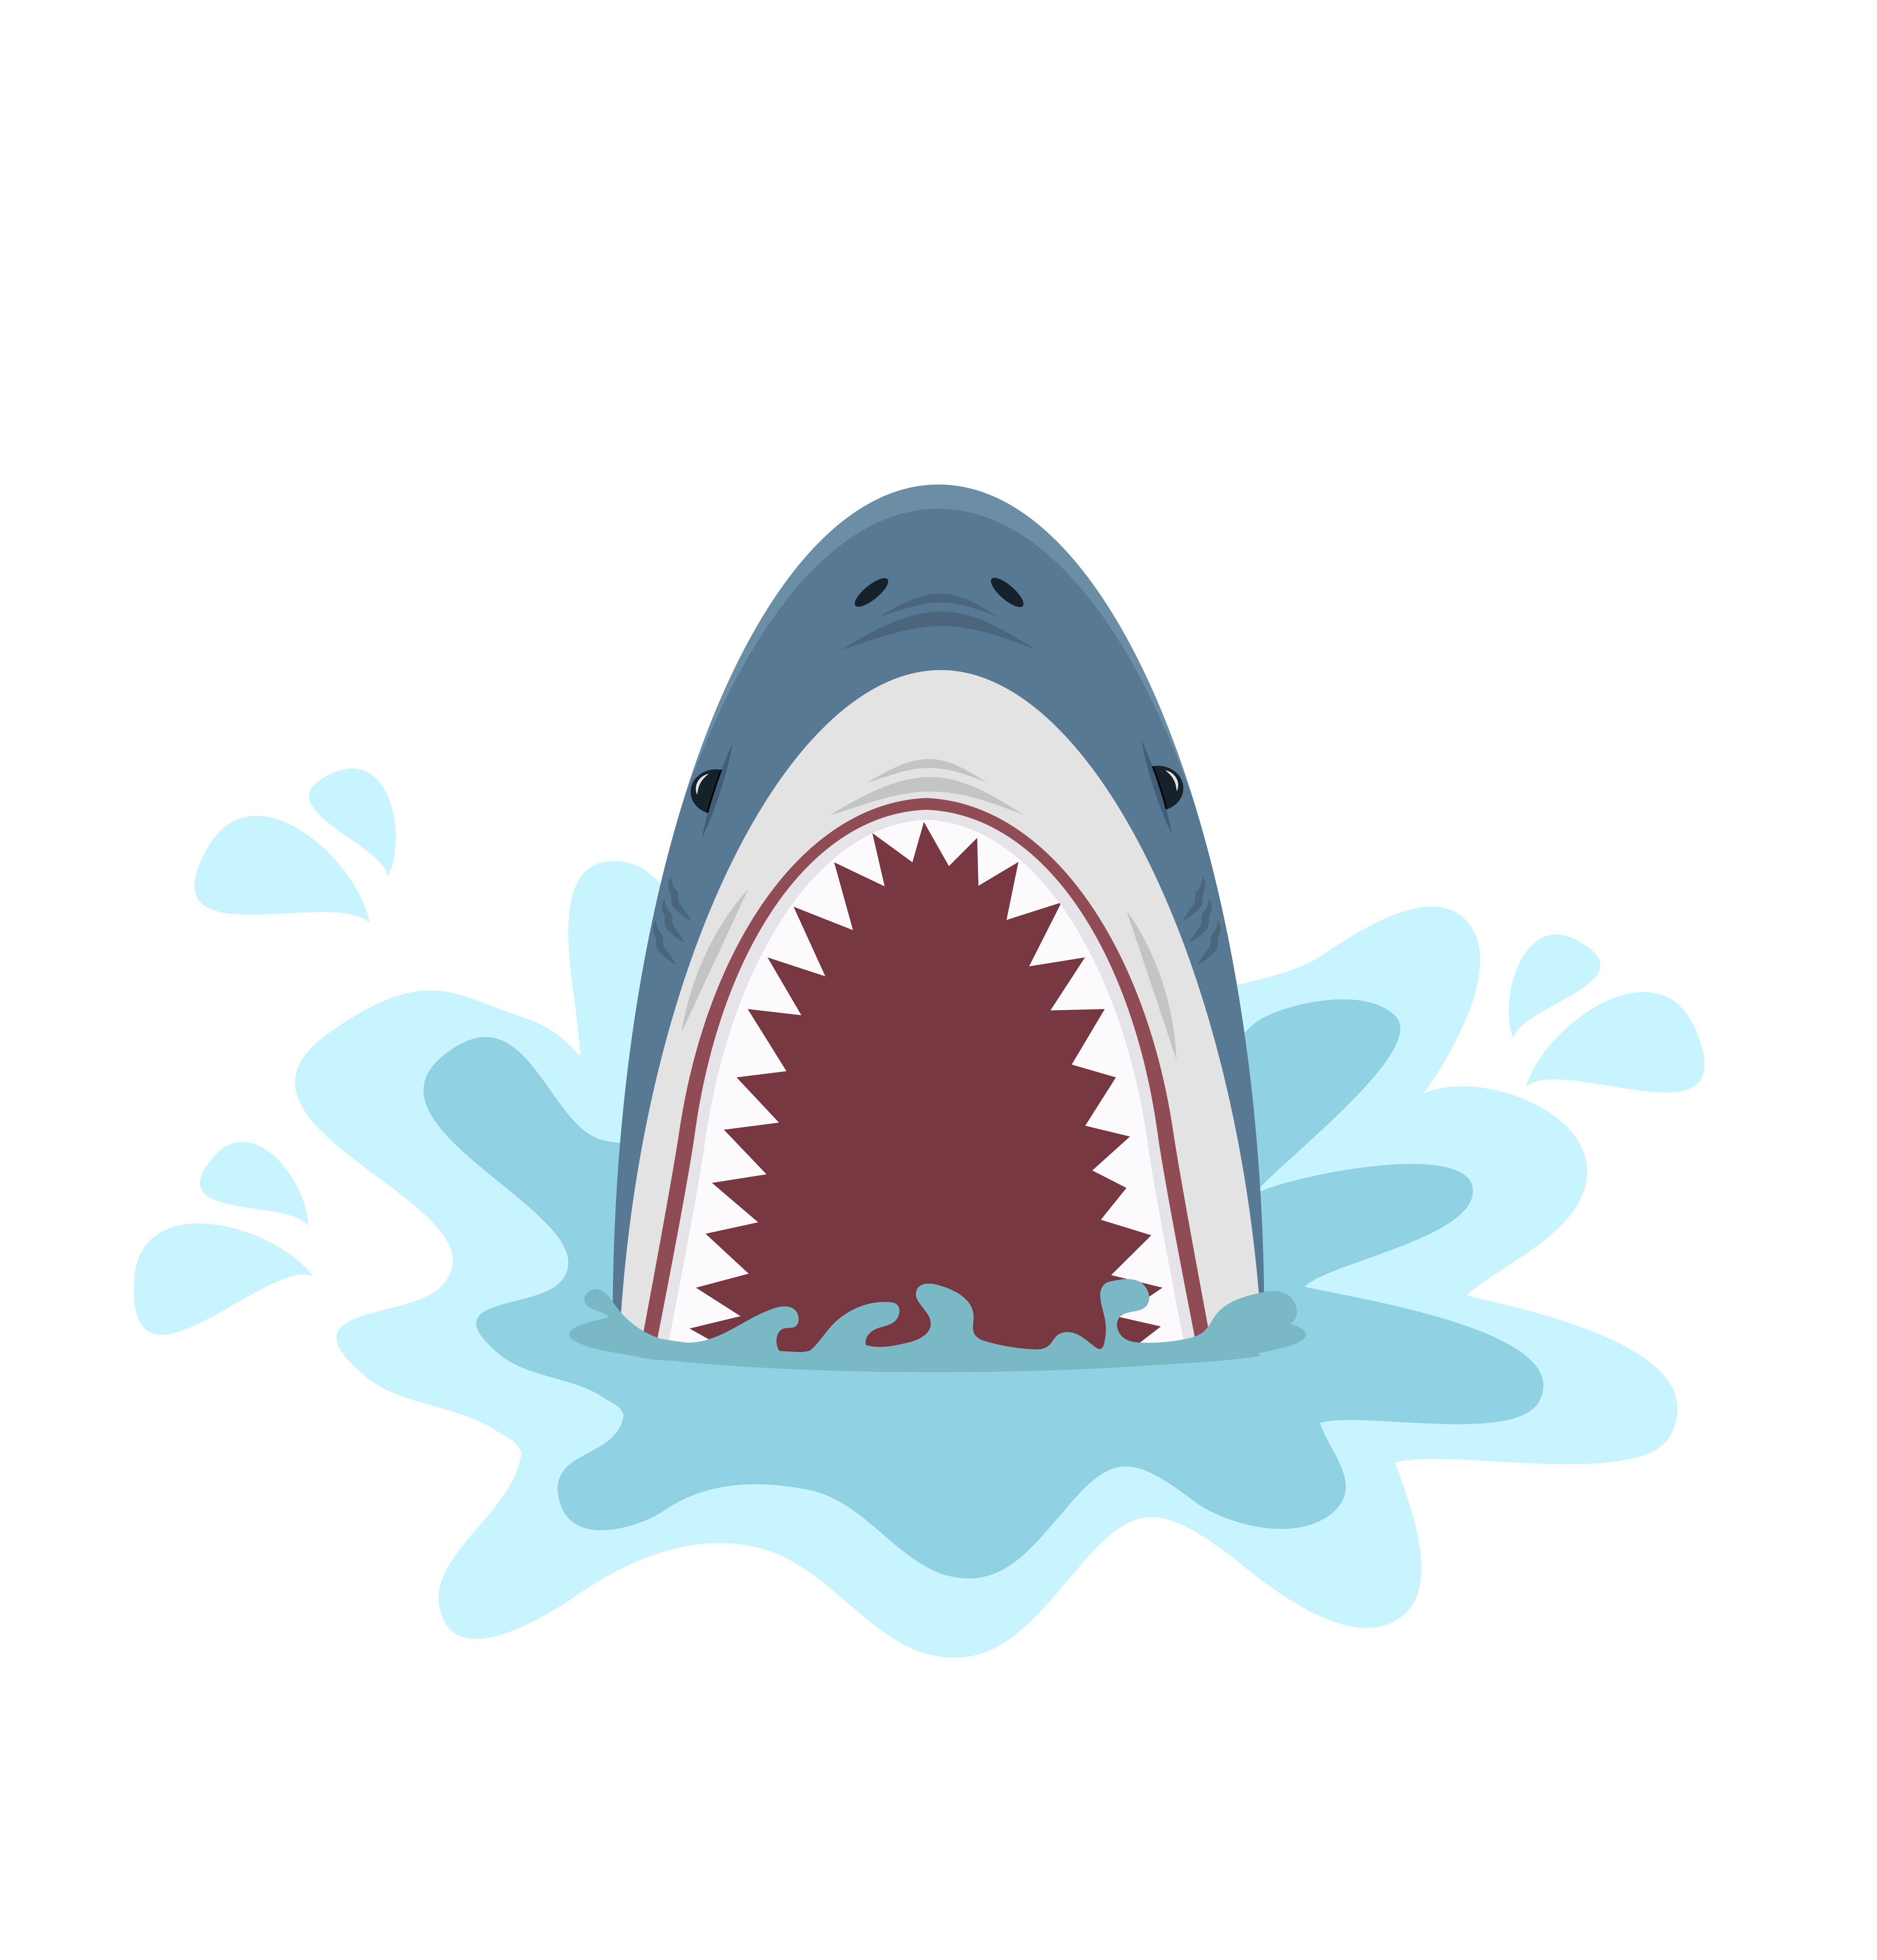 Download shark with open jaws 661049 - Download Free Vectors ...